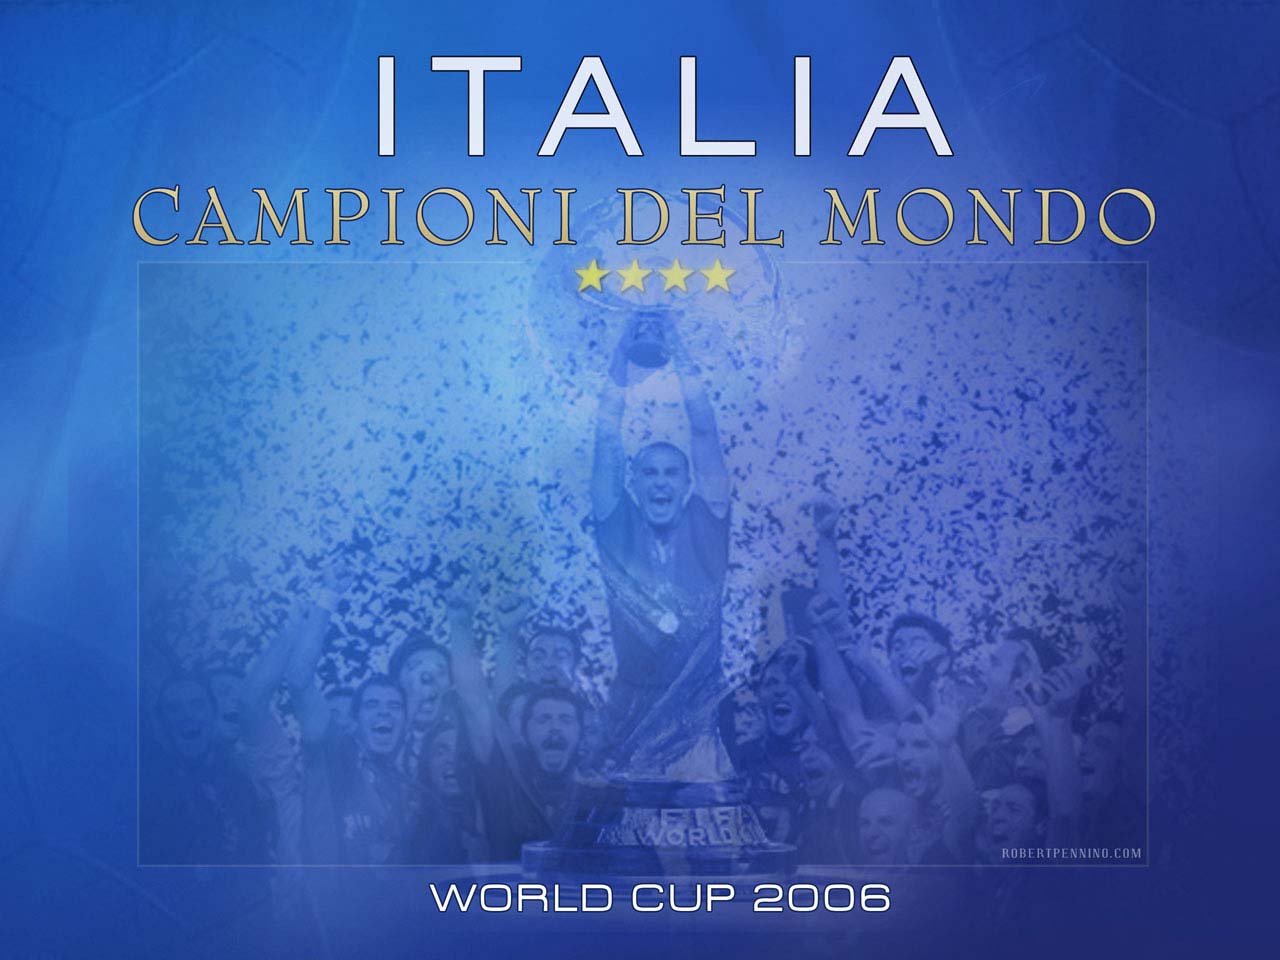 Italy National Football Team Wallpaper High Definition